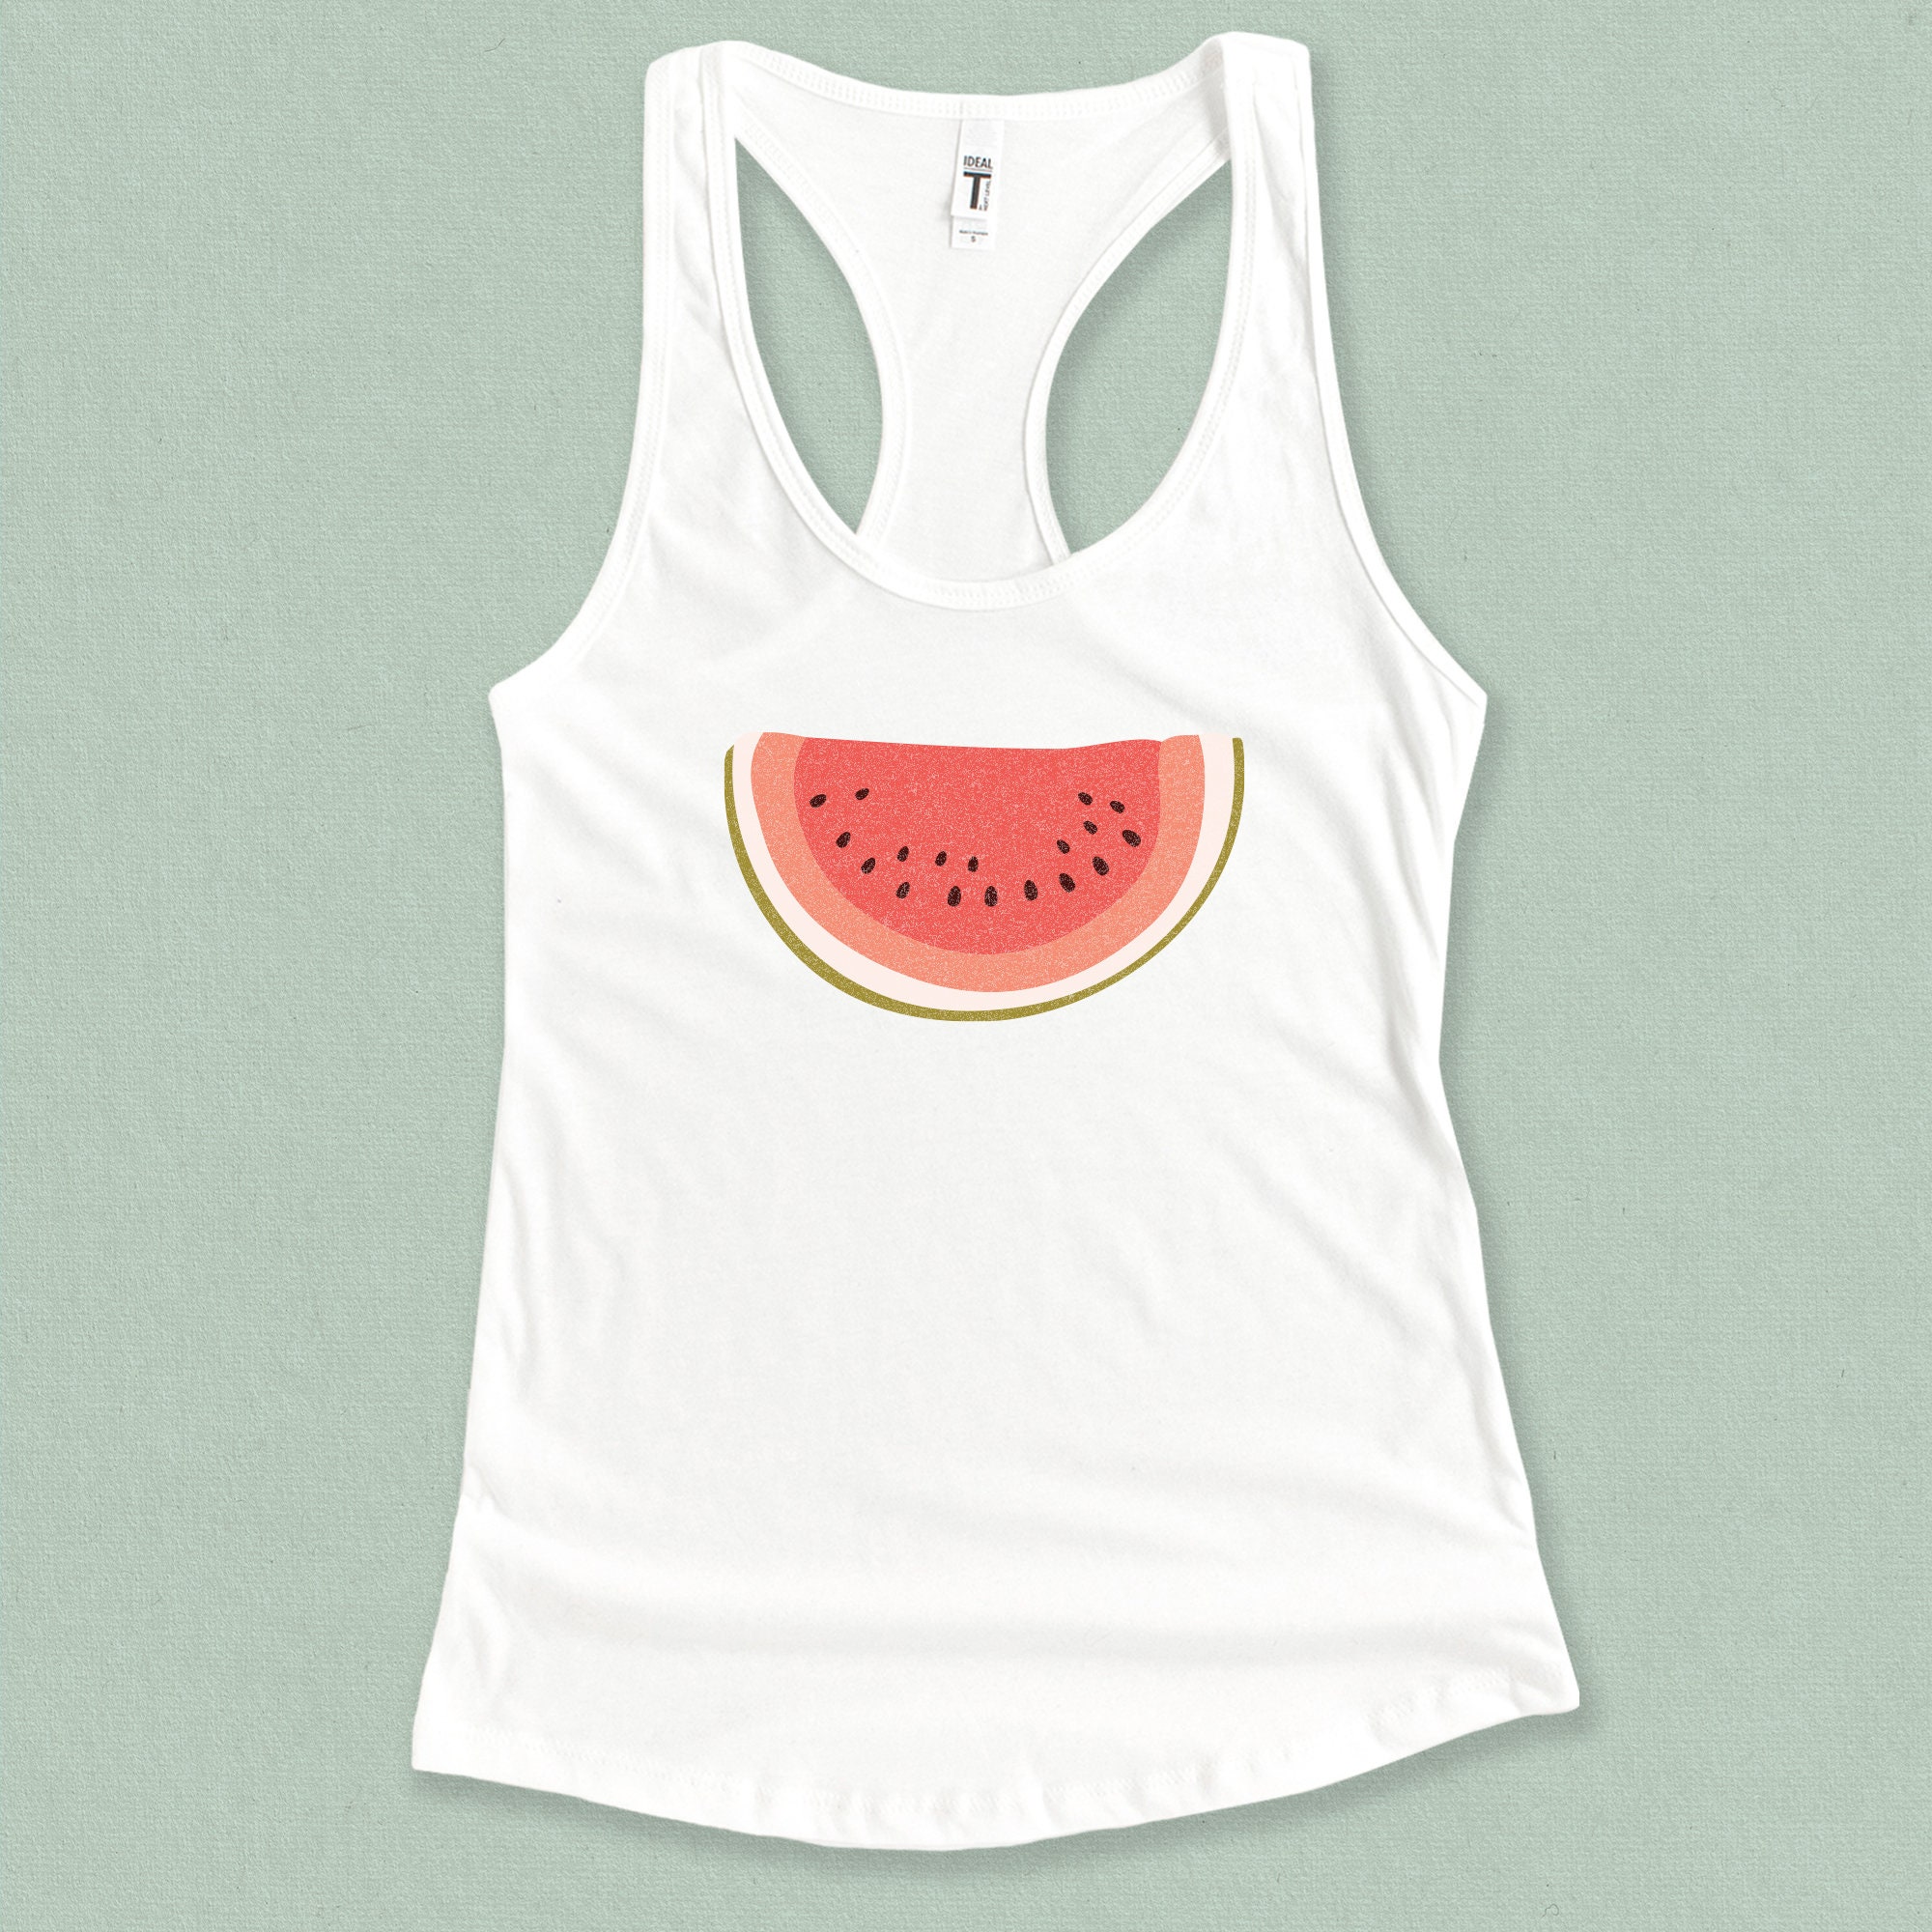 Discover Minimal Watermelon Graphic Tank Top - Fun Retro Summer Tank Top